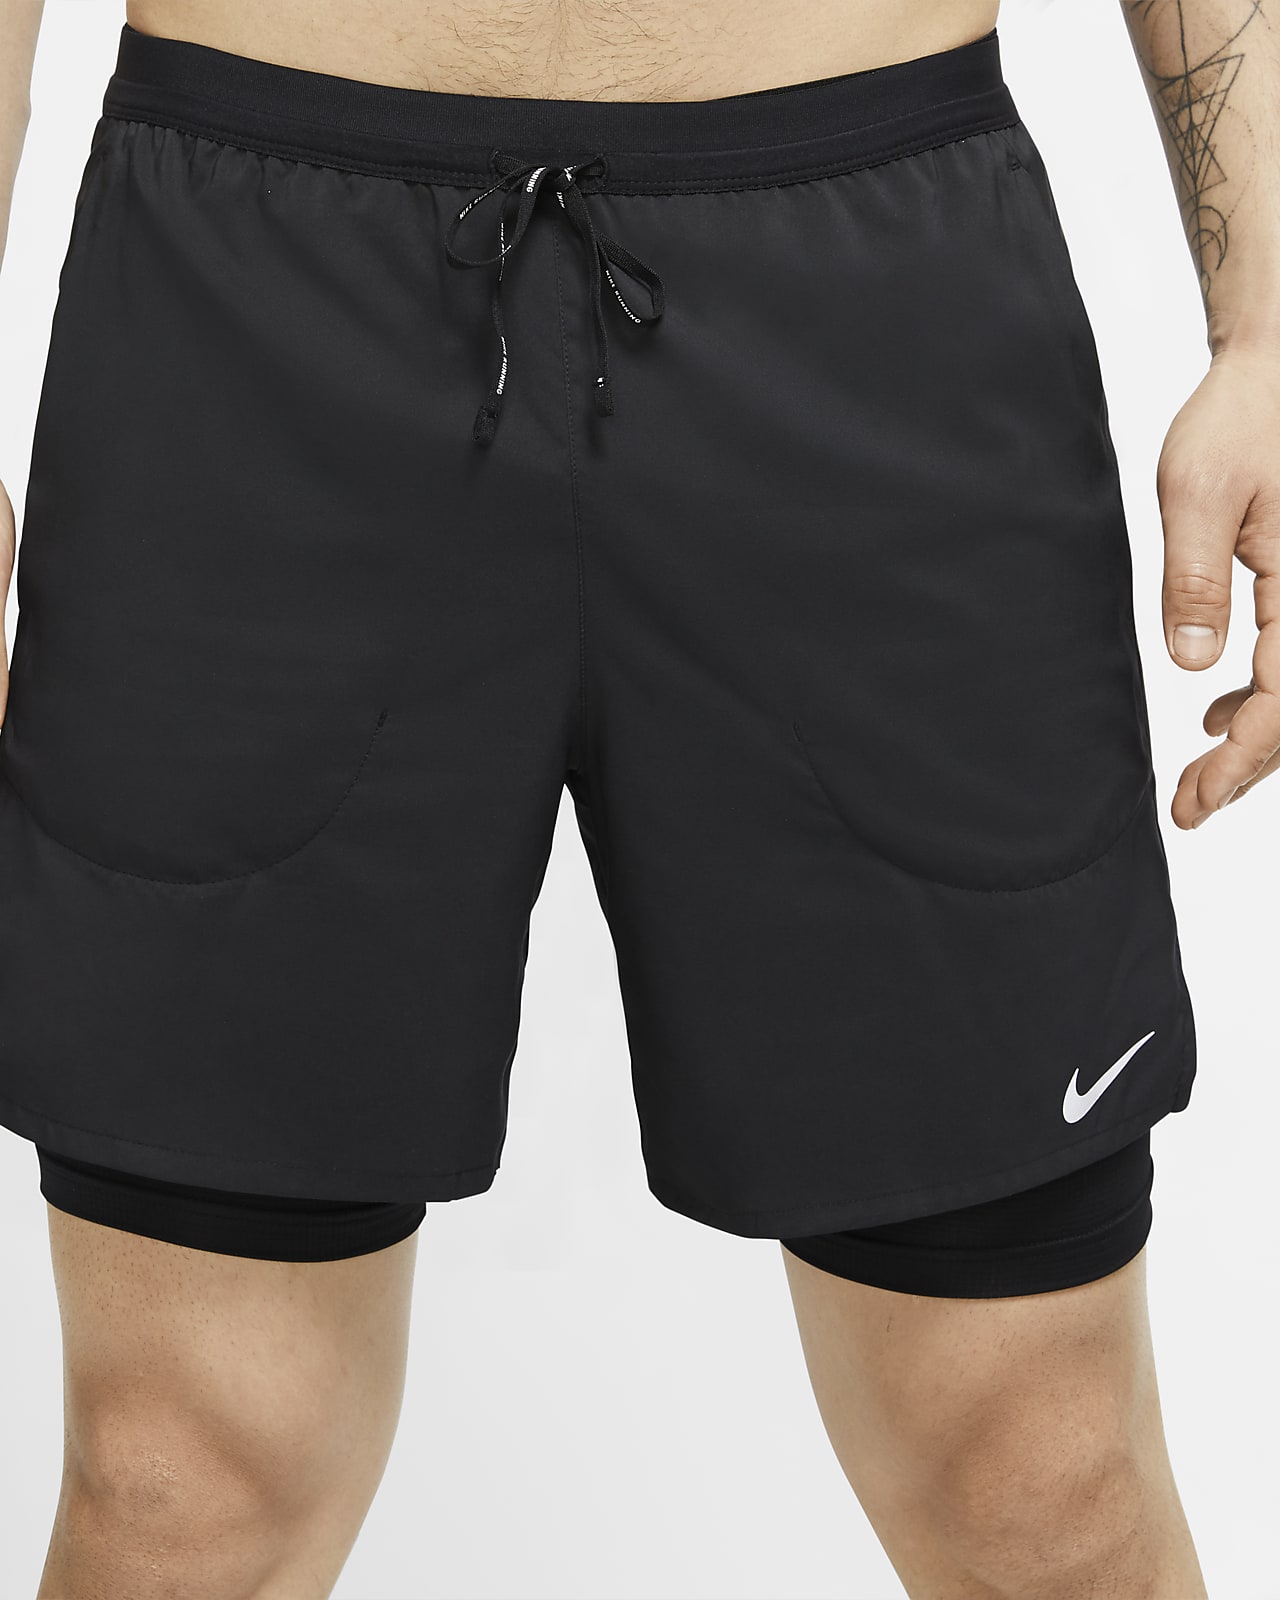 nike 2 inch shorts